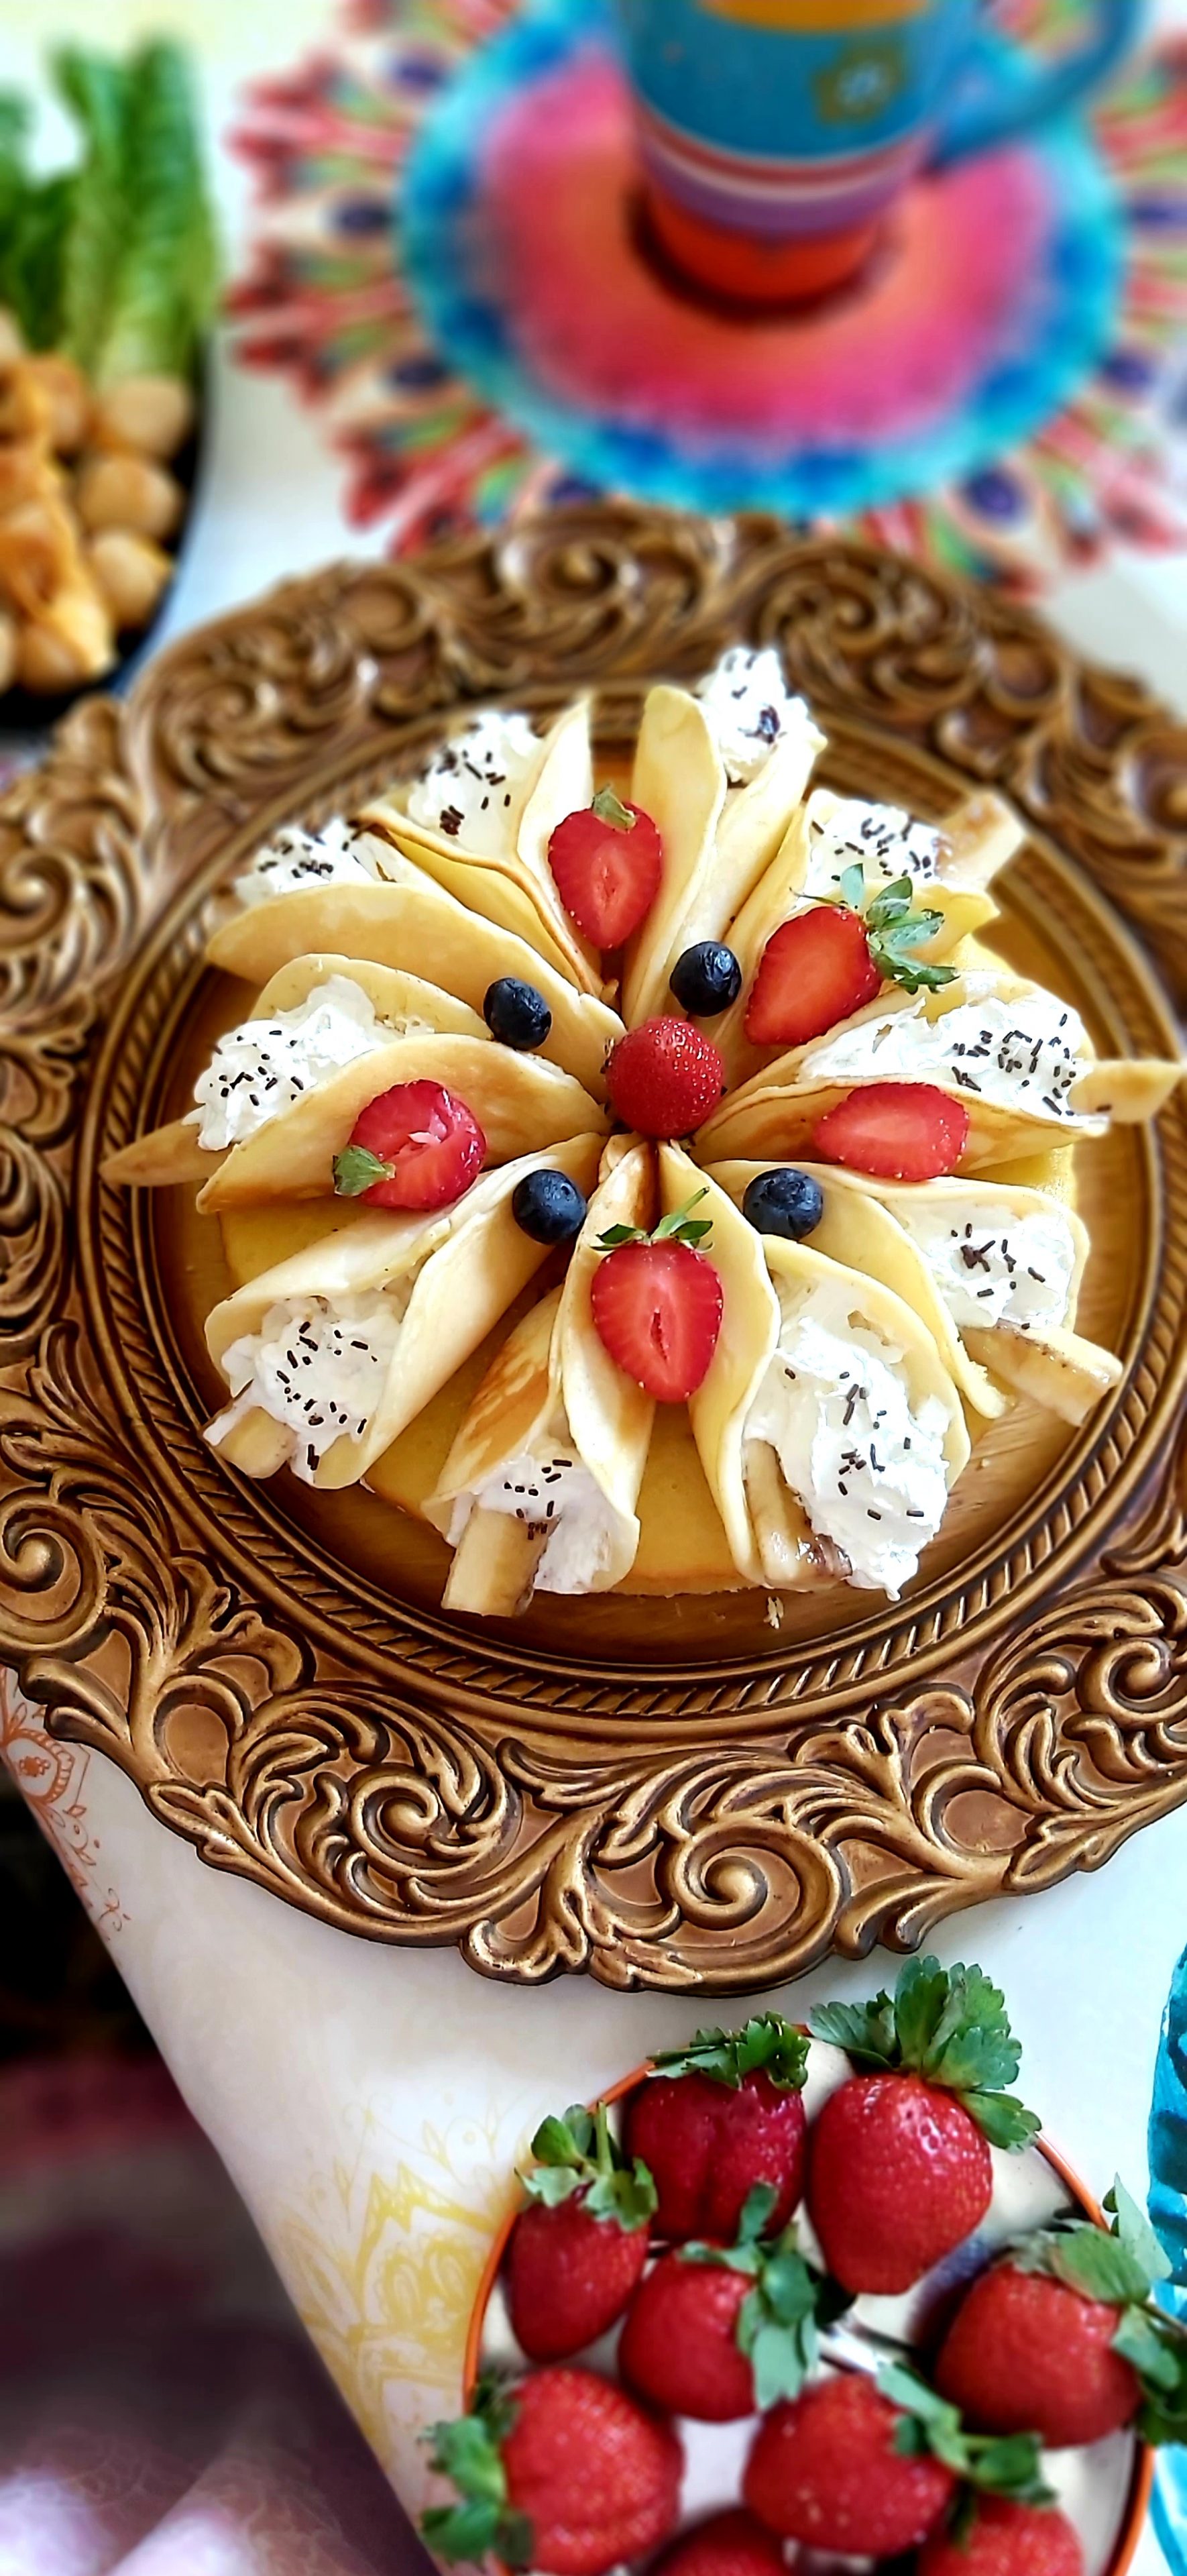 Banana Floral Pan Cake by Umaima Sameer